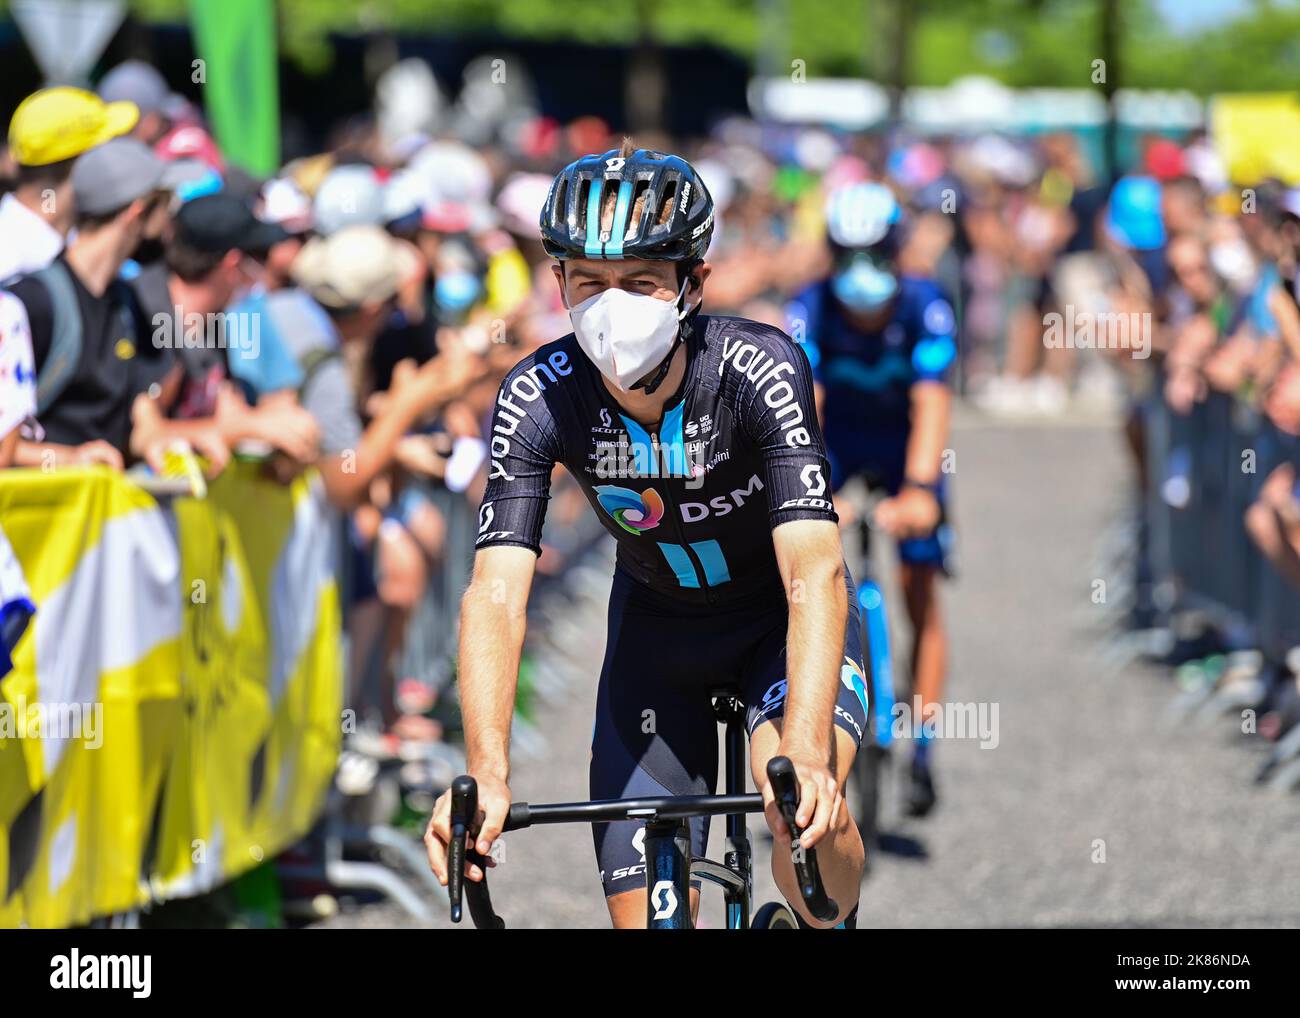 Team DSM Rider Chris HAMILTON beim Start der Tour De France, Etappe 14, Frankreich, 16.. Juli 2022, Credit:Pete Goding/Goding Images/PA Images Stockfoto